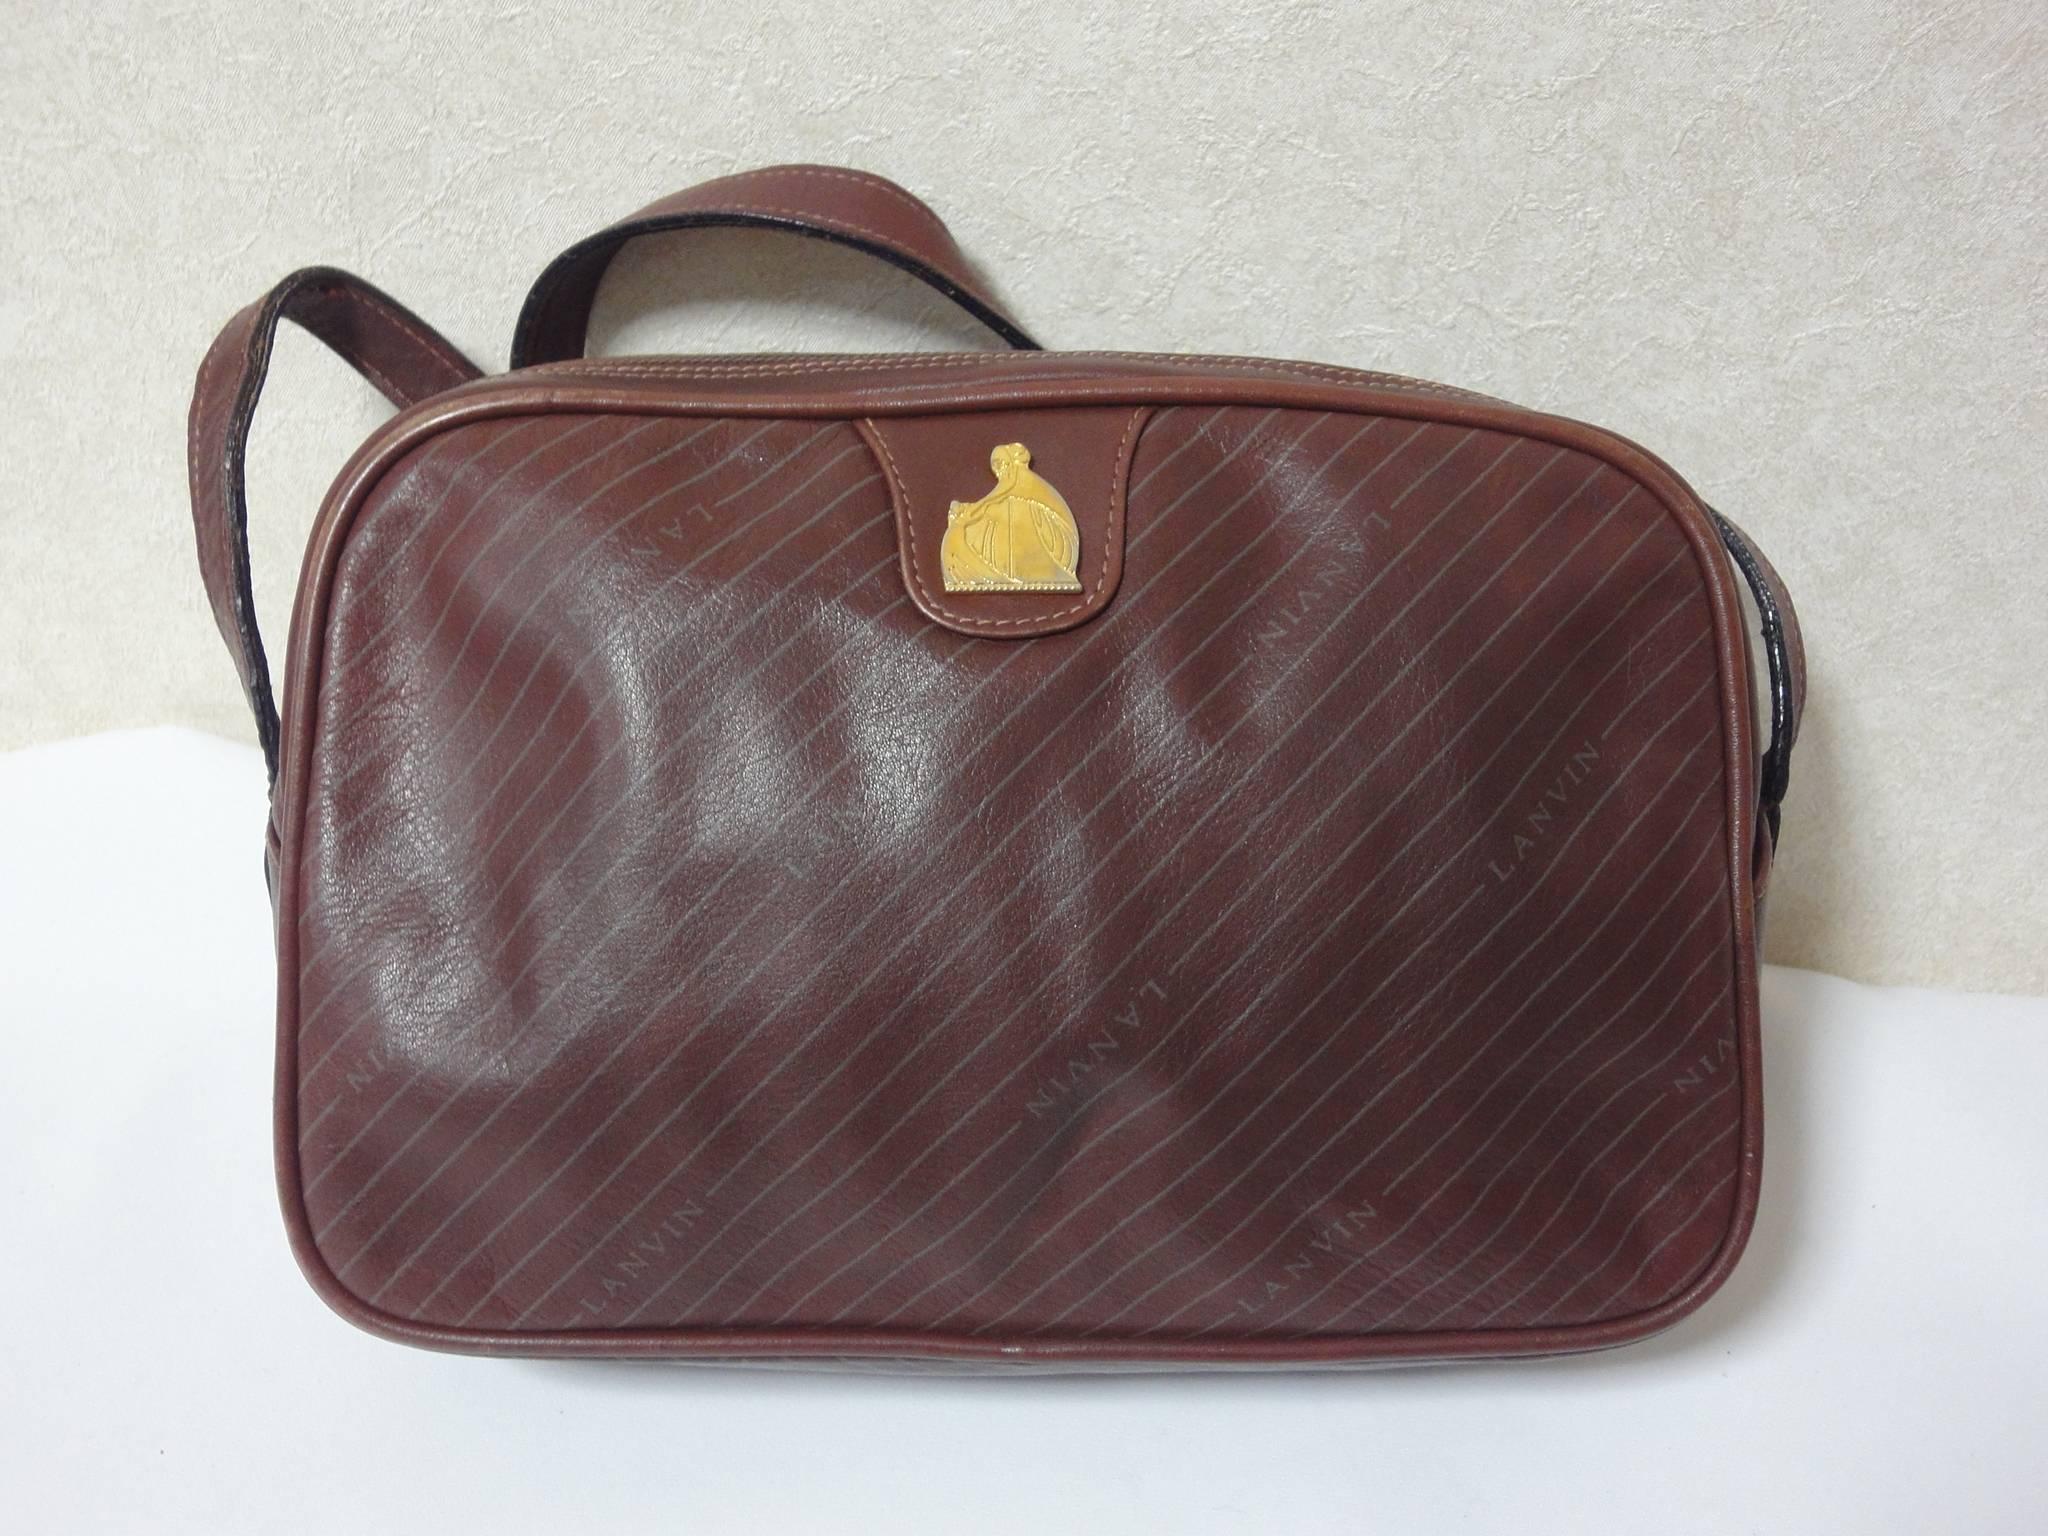 Vintage LANVIN wine brown logo printed leather shoulder bag with iconic logo For Sale 2